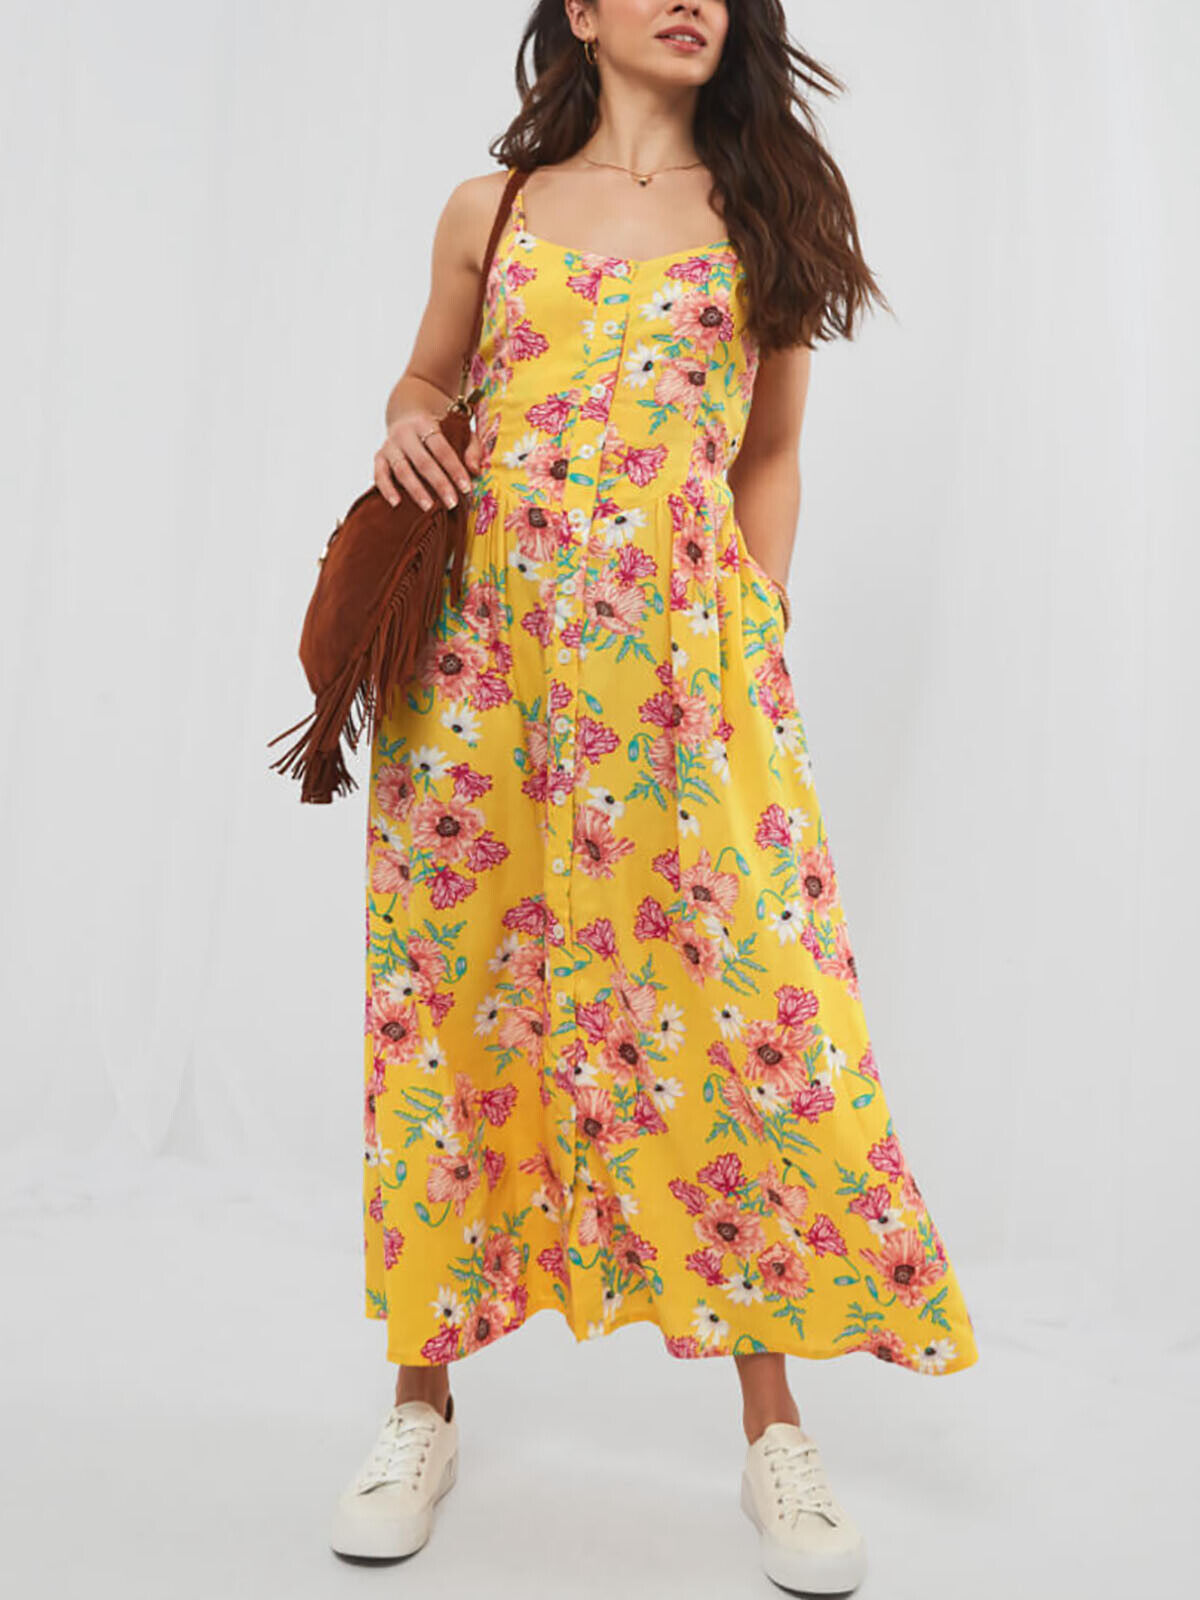 Joe Browns Yellow Joyful Summer Dress Sizes 12, 14, 16, 18 RRP £55